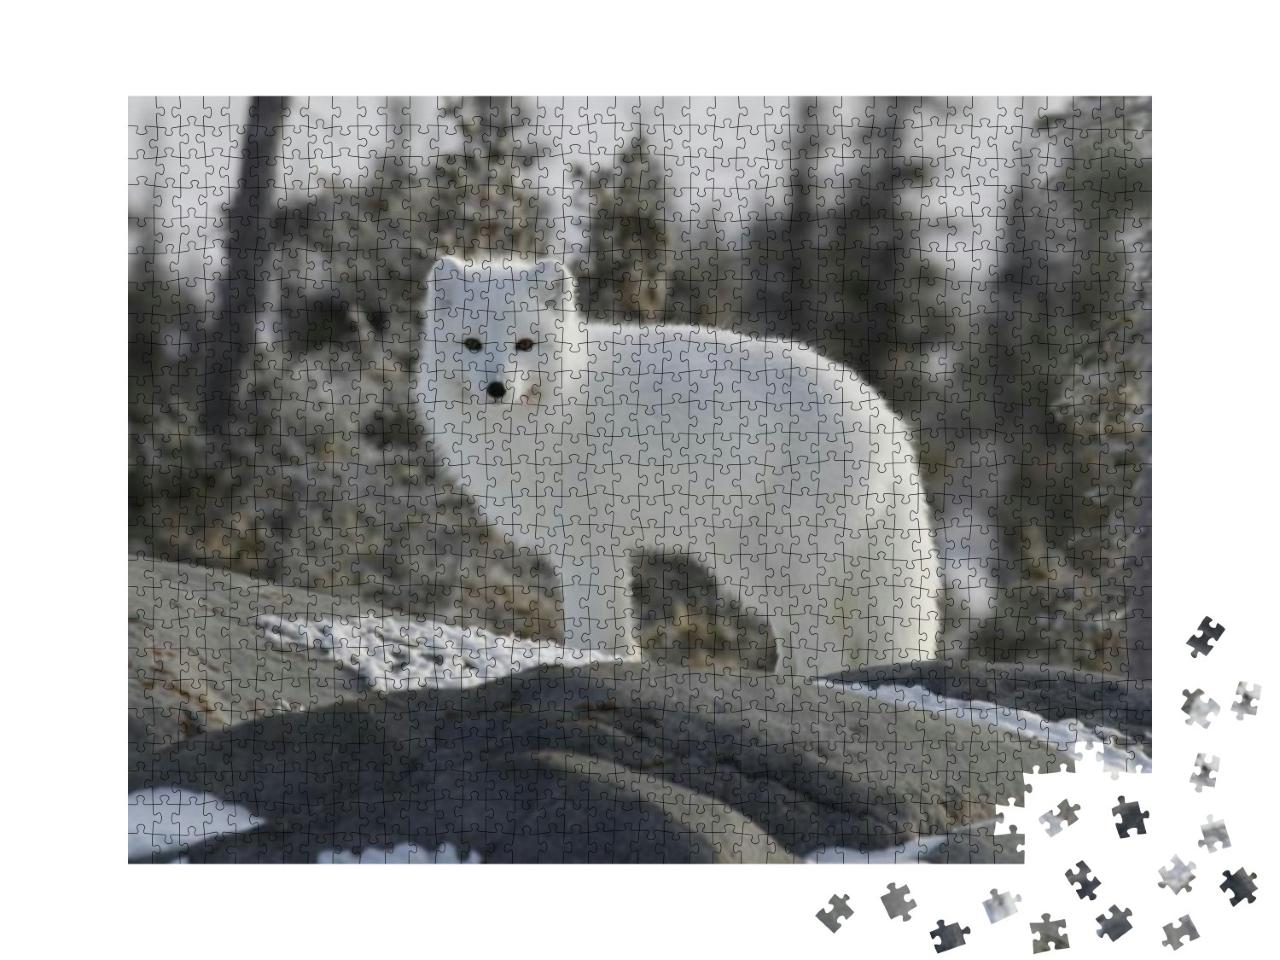 Puzzle 1000 Teile „Polarfuchs, Vulpes Lagopus, in weißem Winterfell“